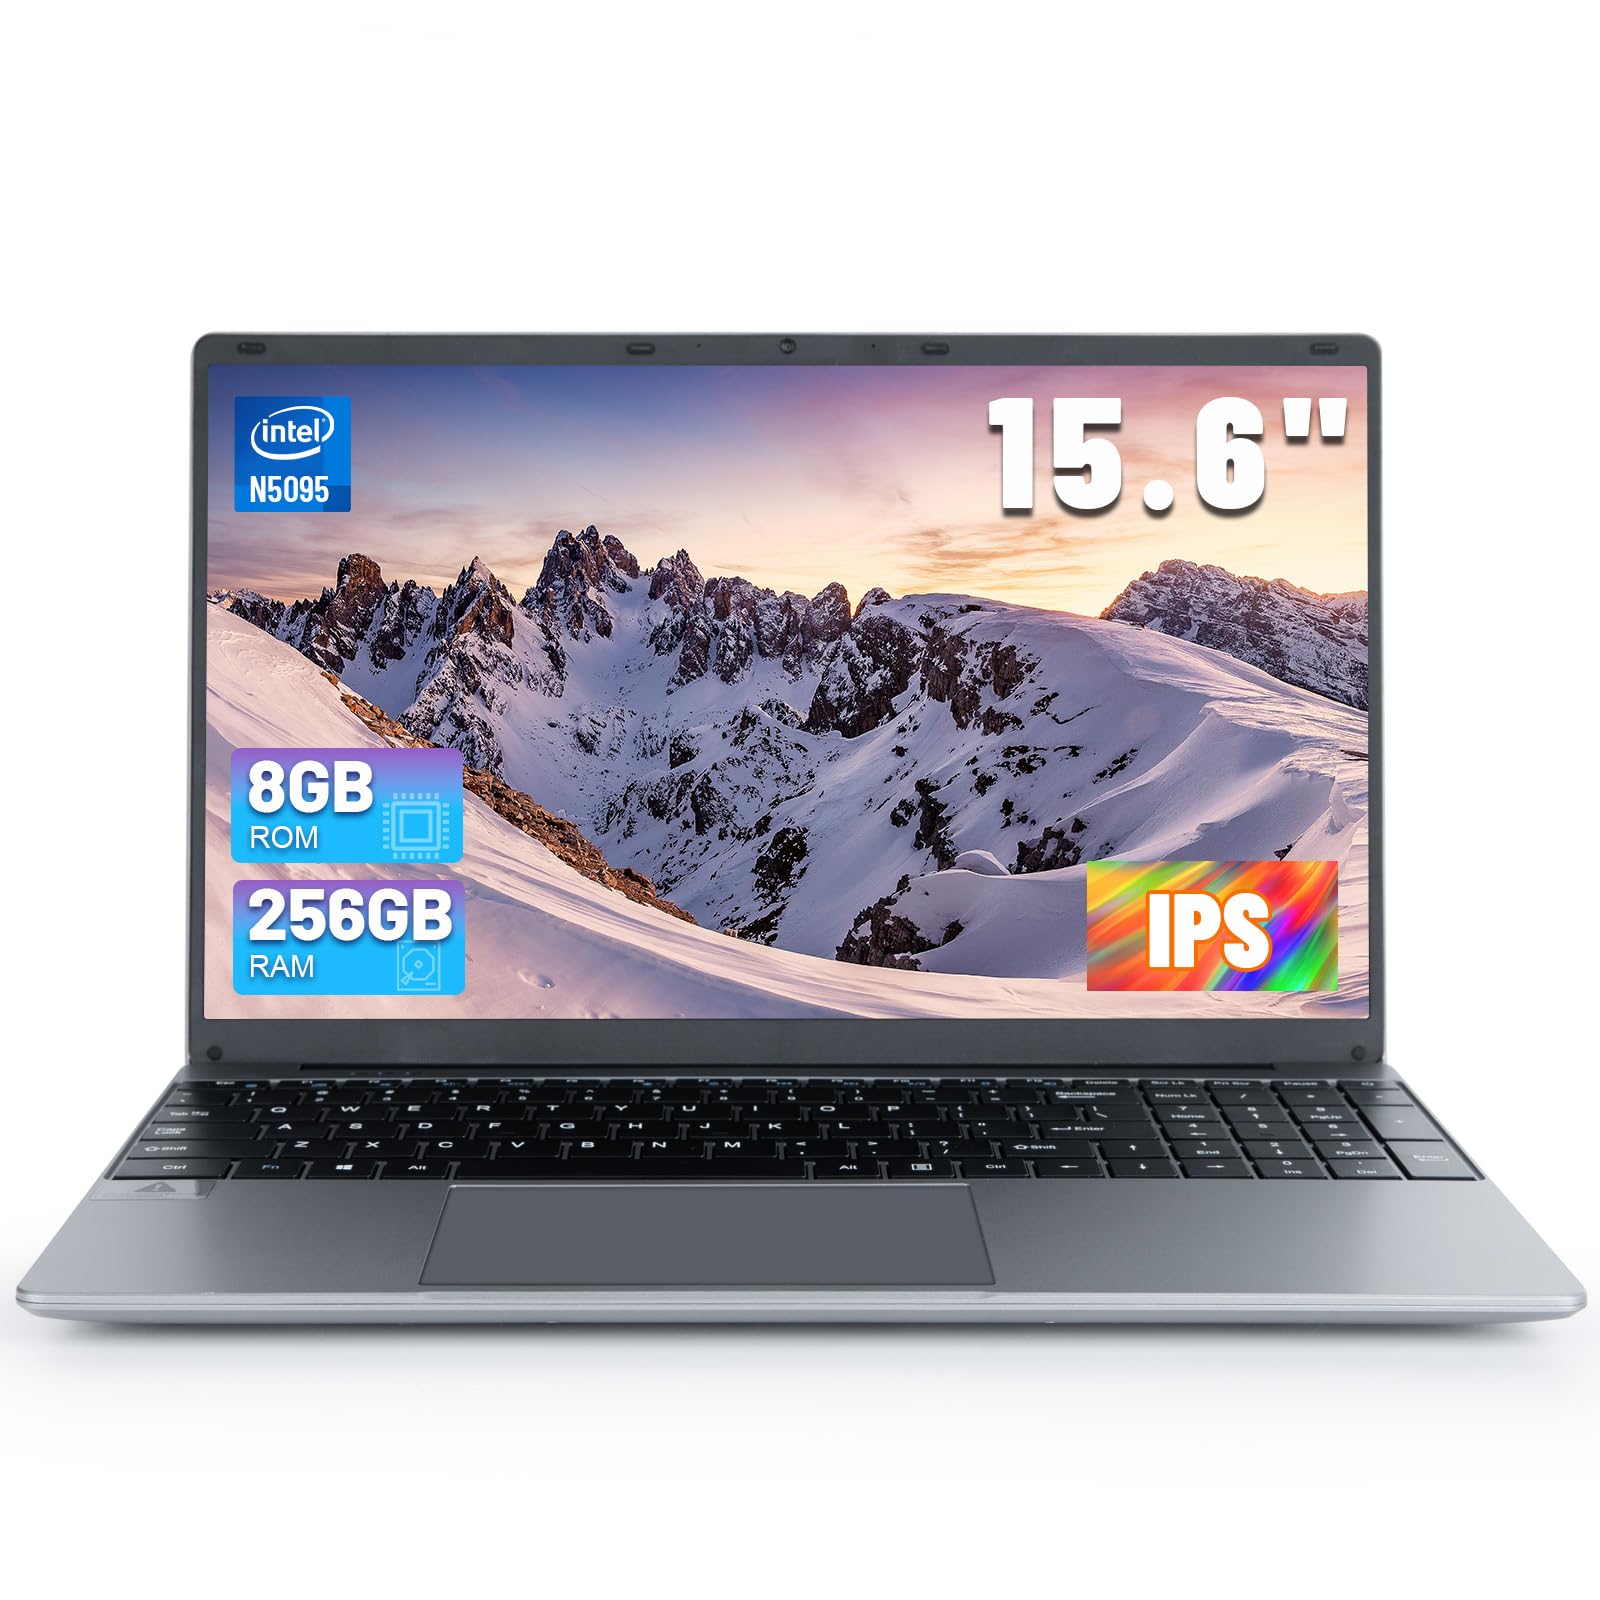 AEEZO Laptop Computer, 15.6 inch Laptop, 1366 * 768 IPS Display, Intel Celeron N5095 Processors,8GB DDR4 256GB SSD, Large Battery Capacity, 2.4G/5G WiFi, Bluetooth 4.2, Mini-HDMI